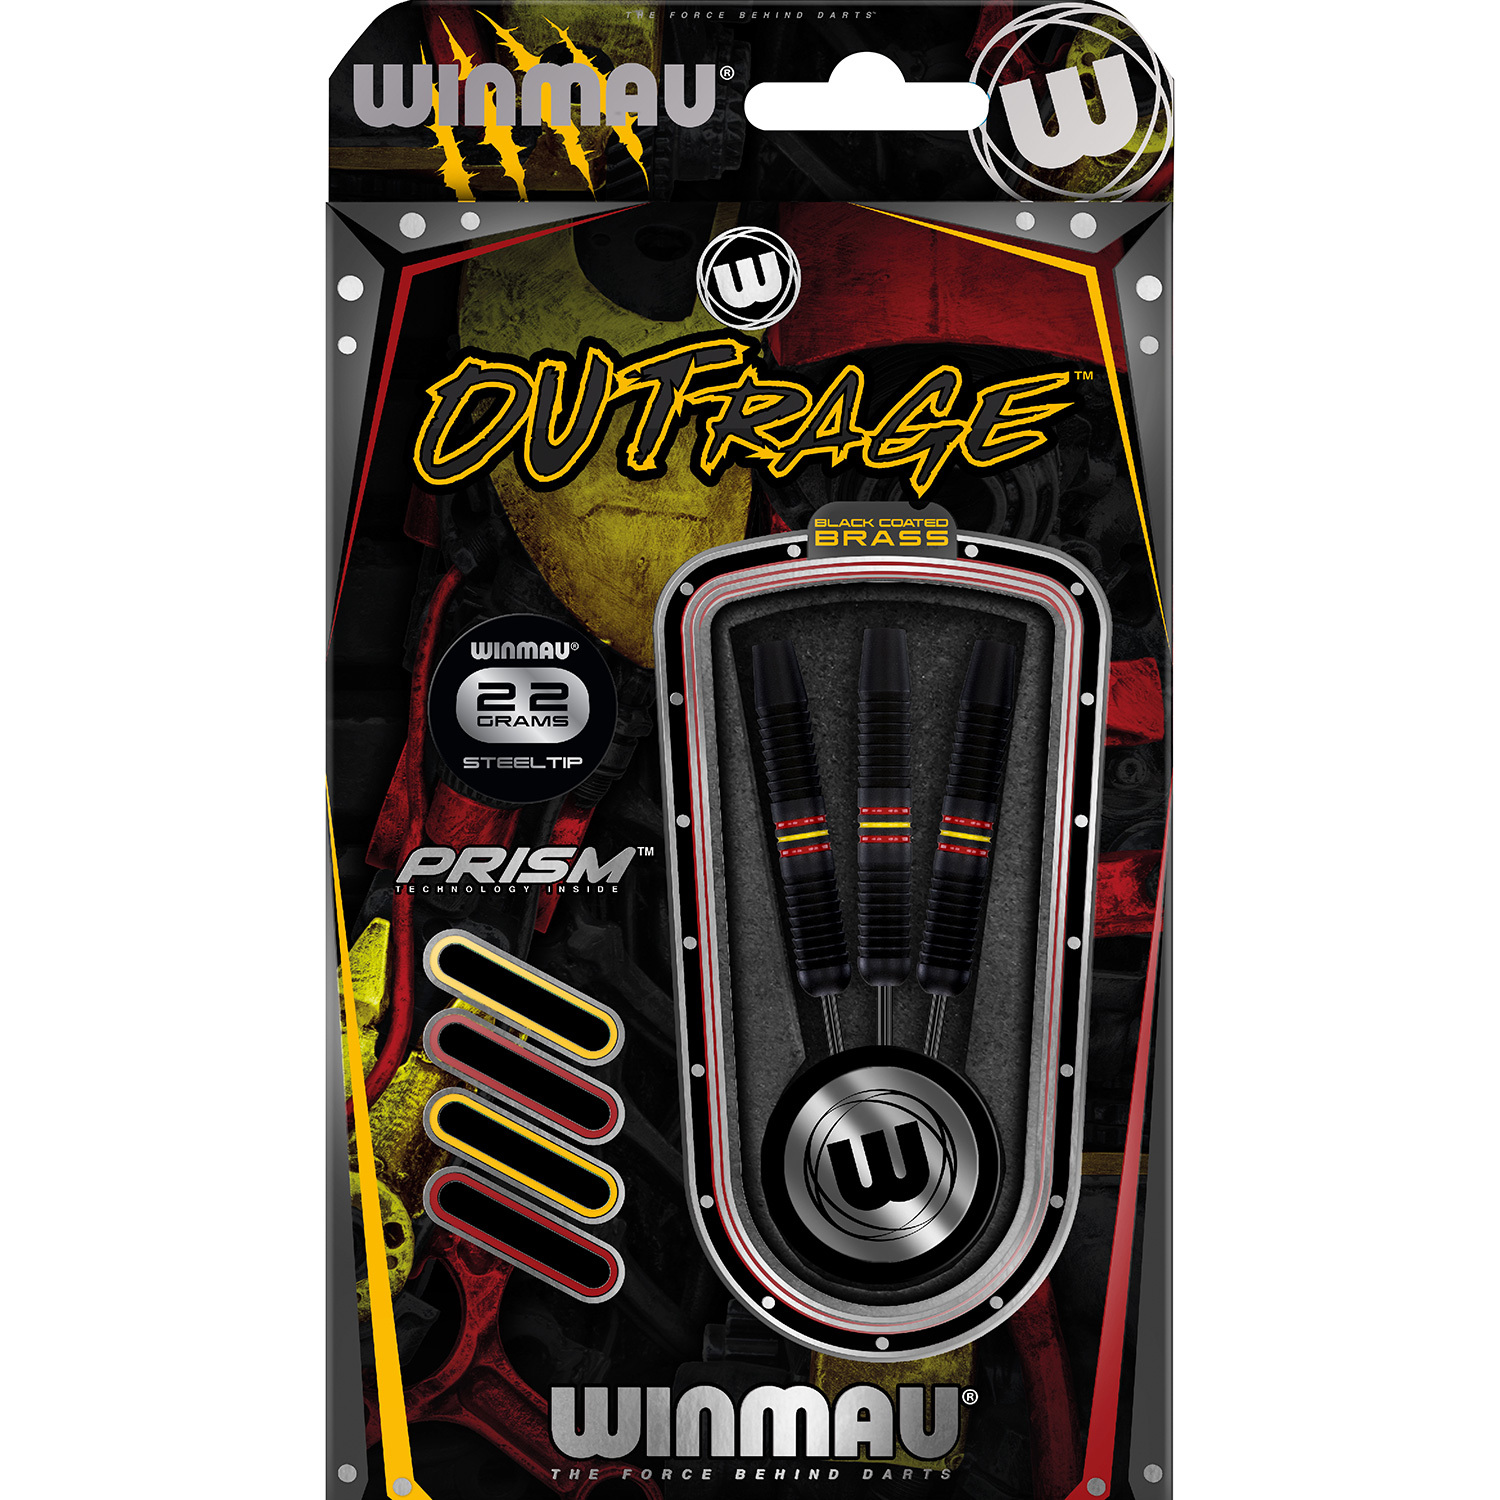 WINMAU Winmau Outrage steeltip darts Brass 22gr